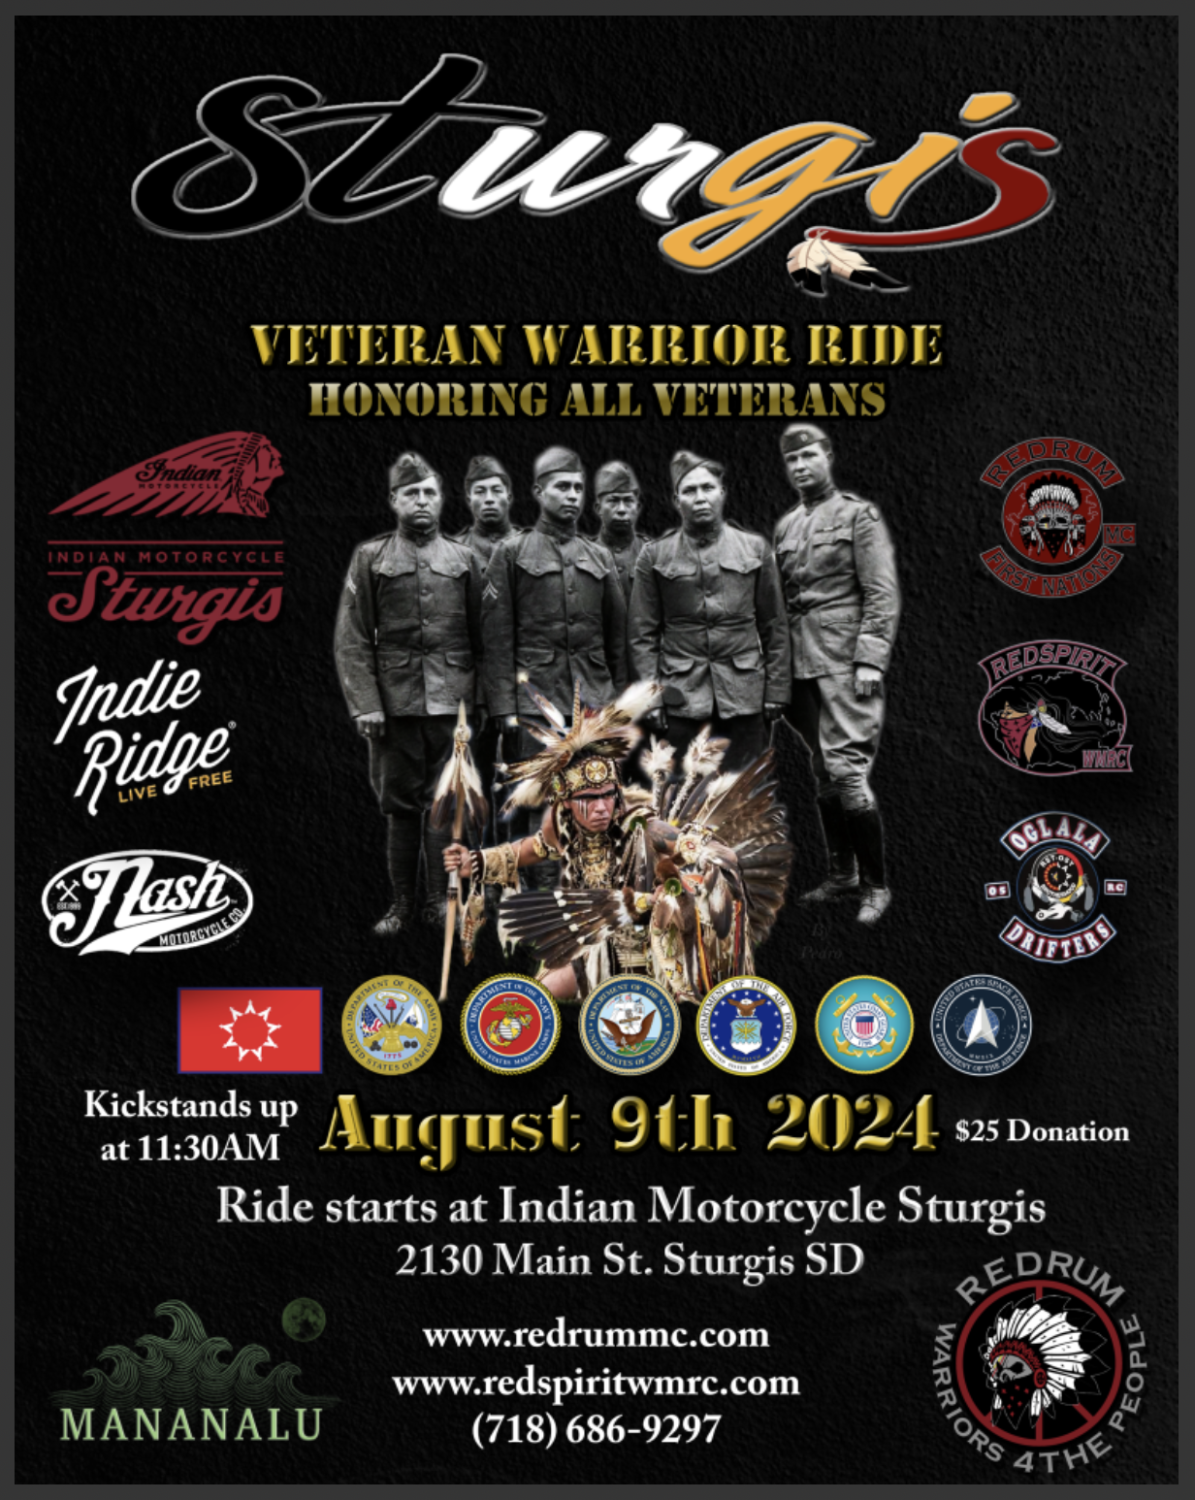 Sturgis Veteran Warrior Ride Honoring All Veterans